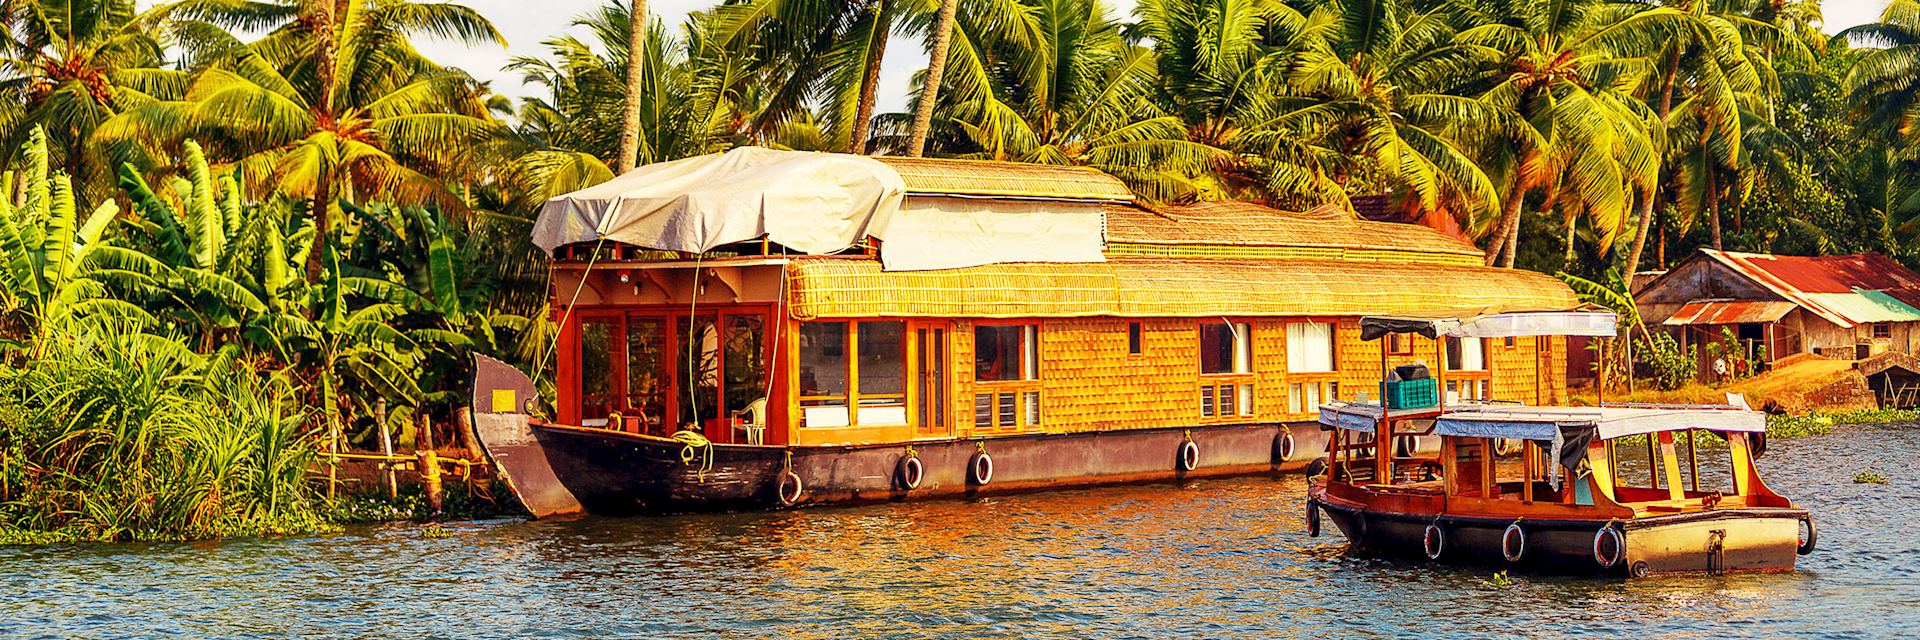 Indian houseboat